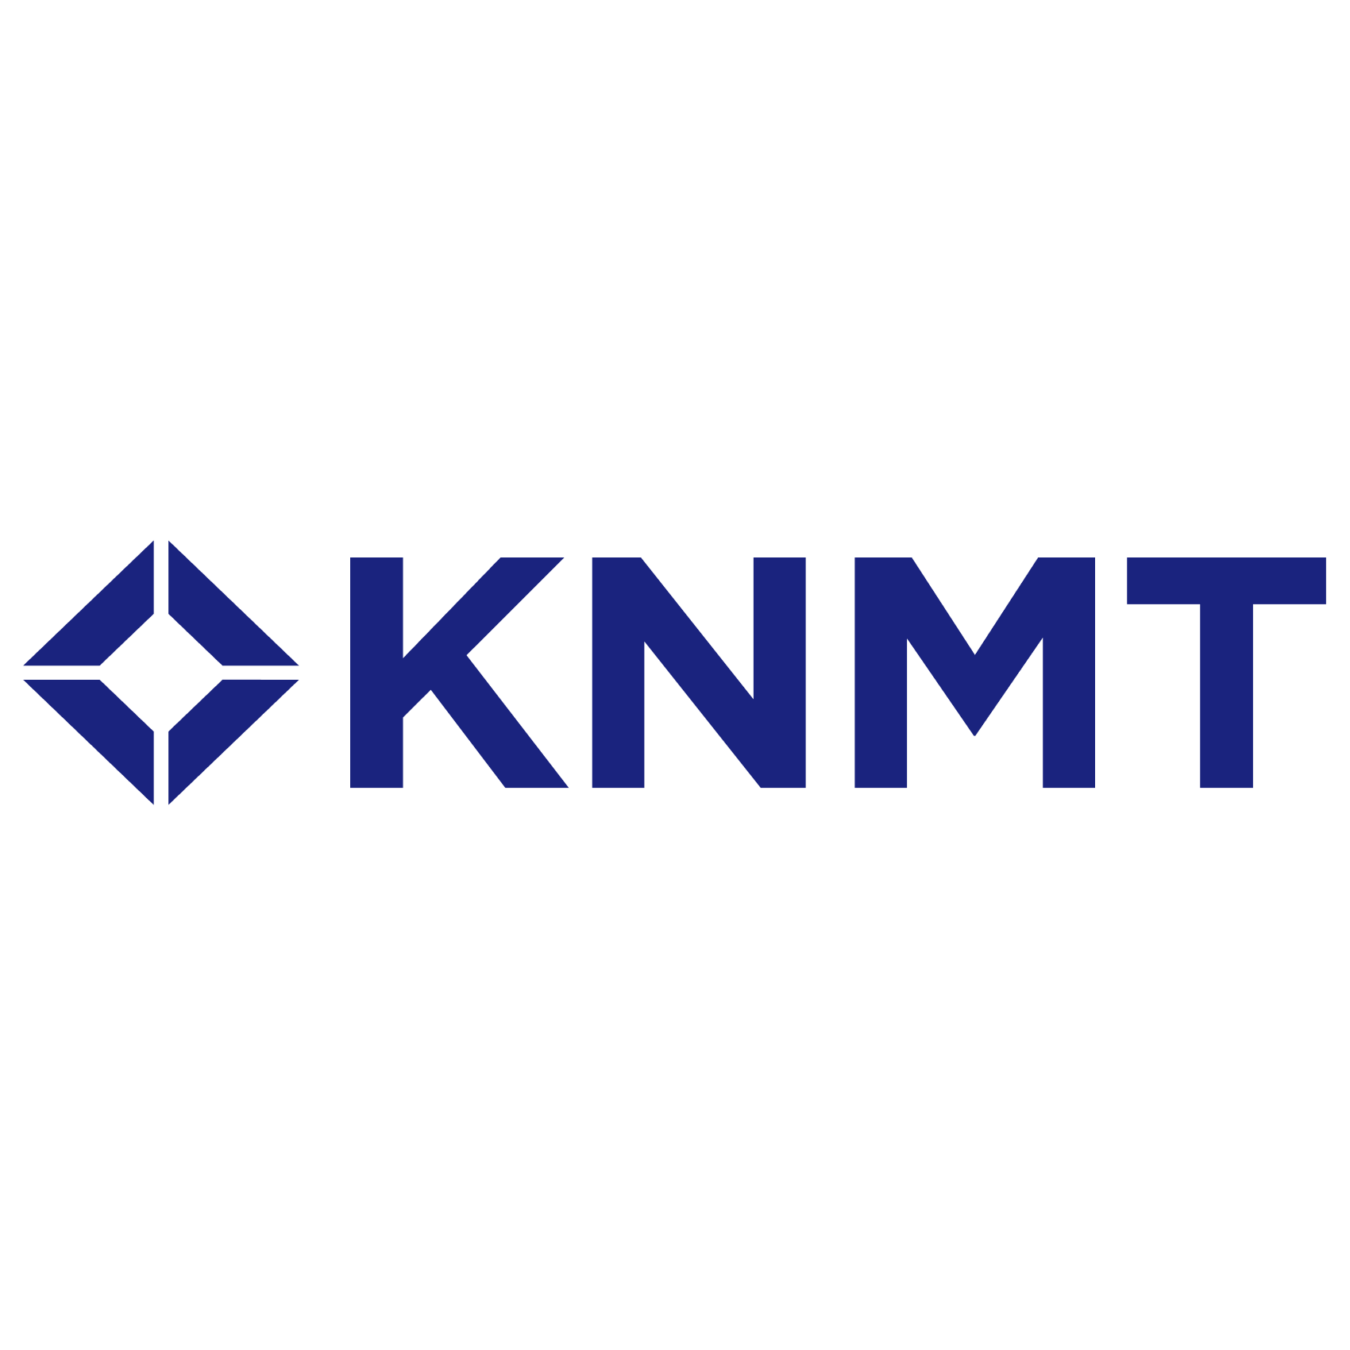 KNMT logo transparant